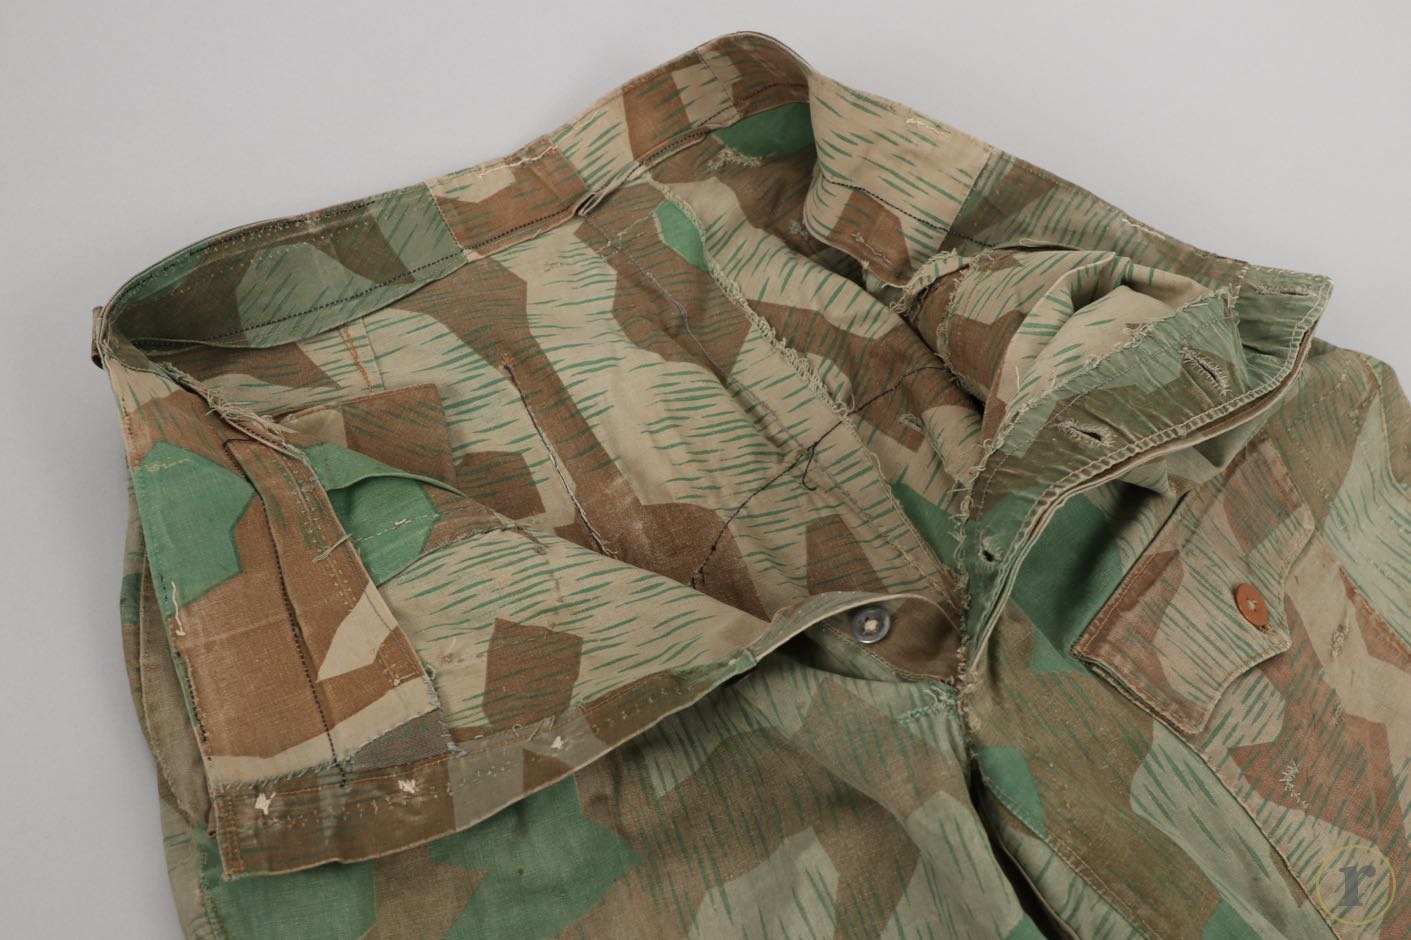 ratisbon's | Wehrmacht splinter camo trousers - field made | DISCOVER ...